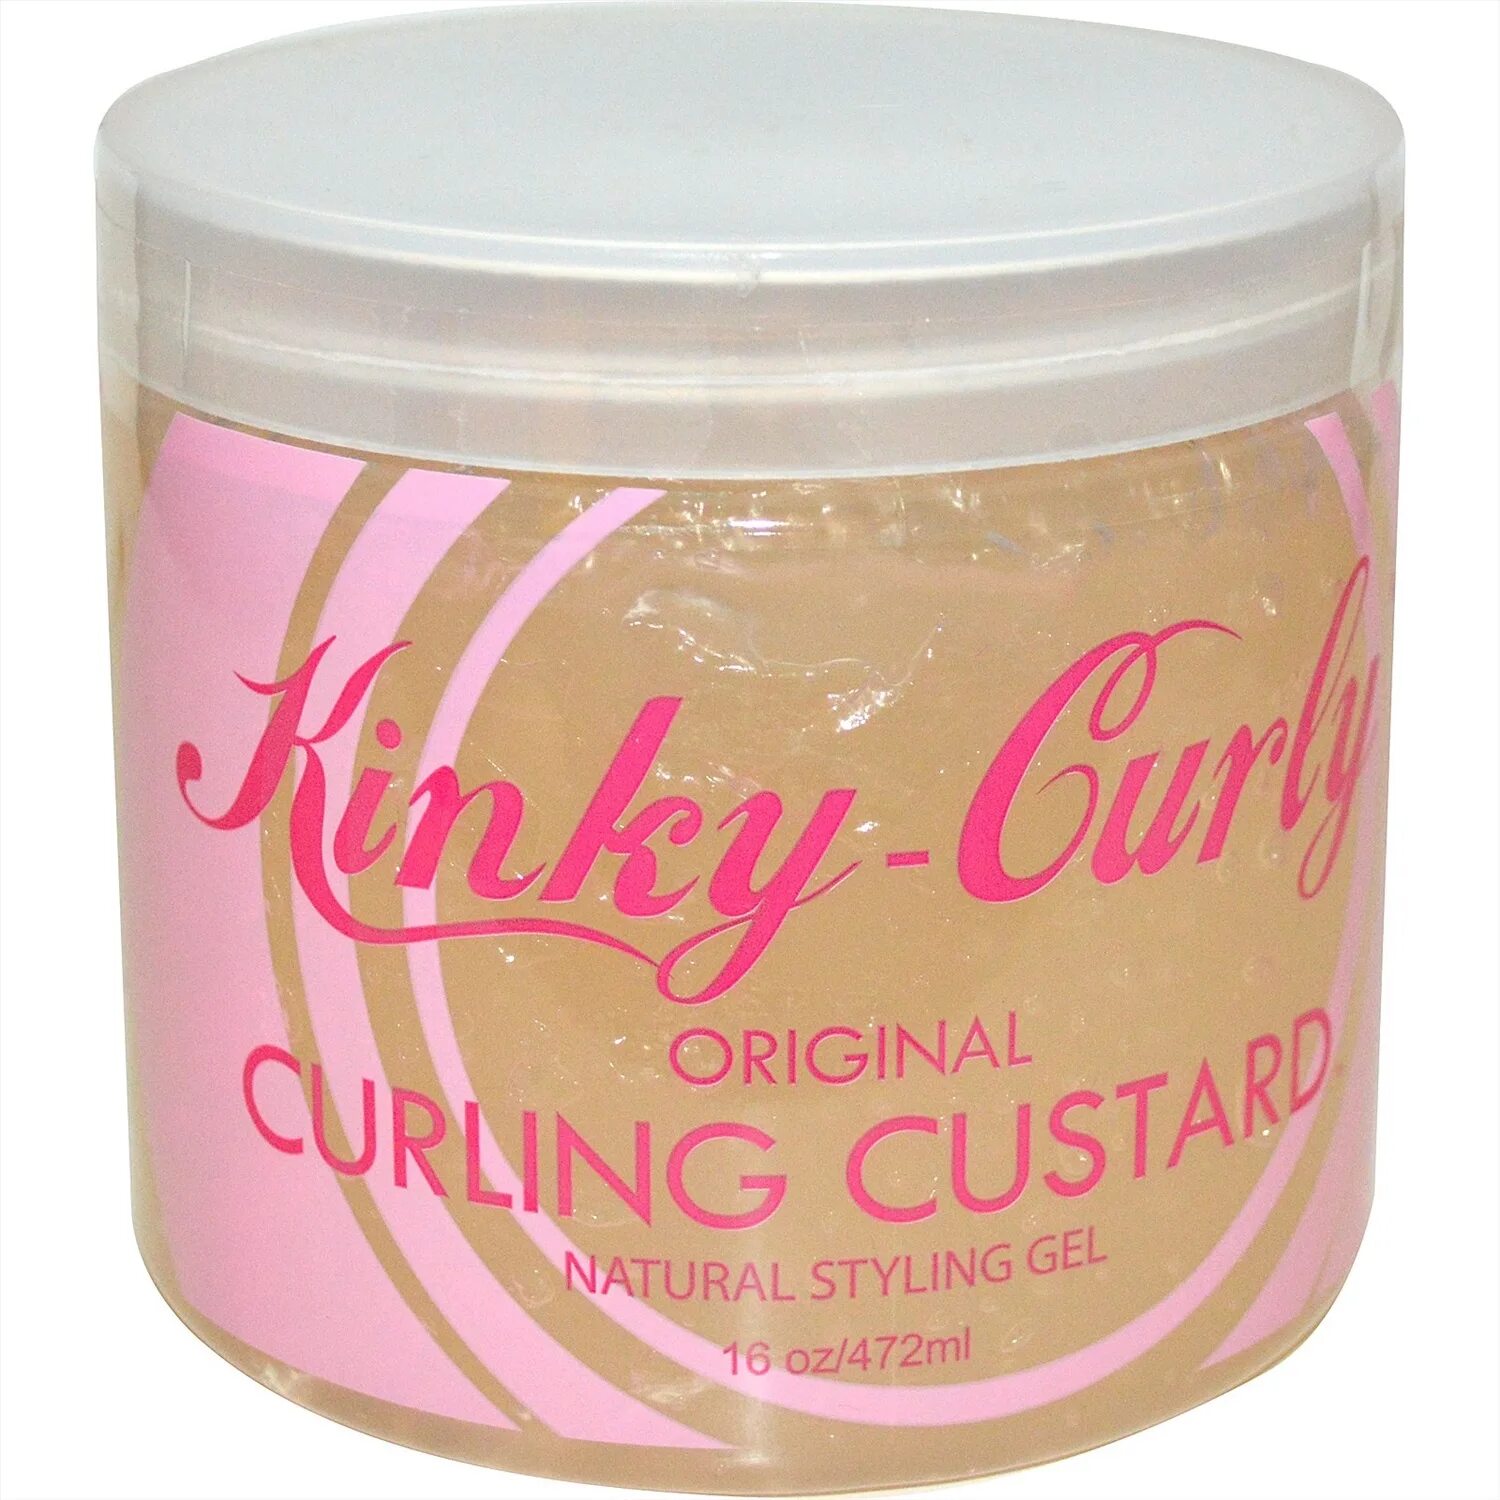 Kinky-curly Original Curling Custard natural styling Gel. Кастард kinky curly. Kinky curly гель. Гель для волос Кинки Керли. Гель для вьющихся волос